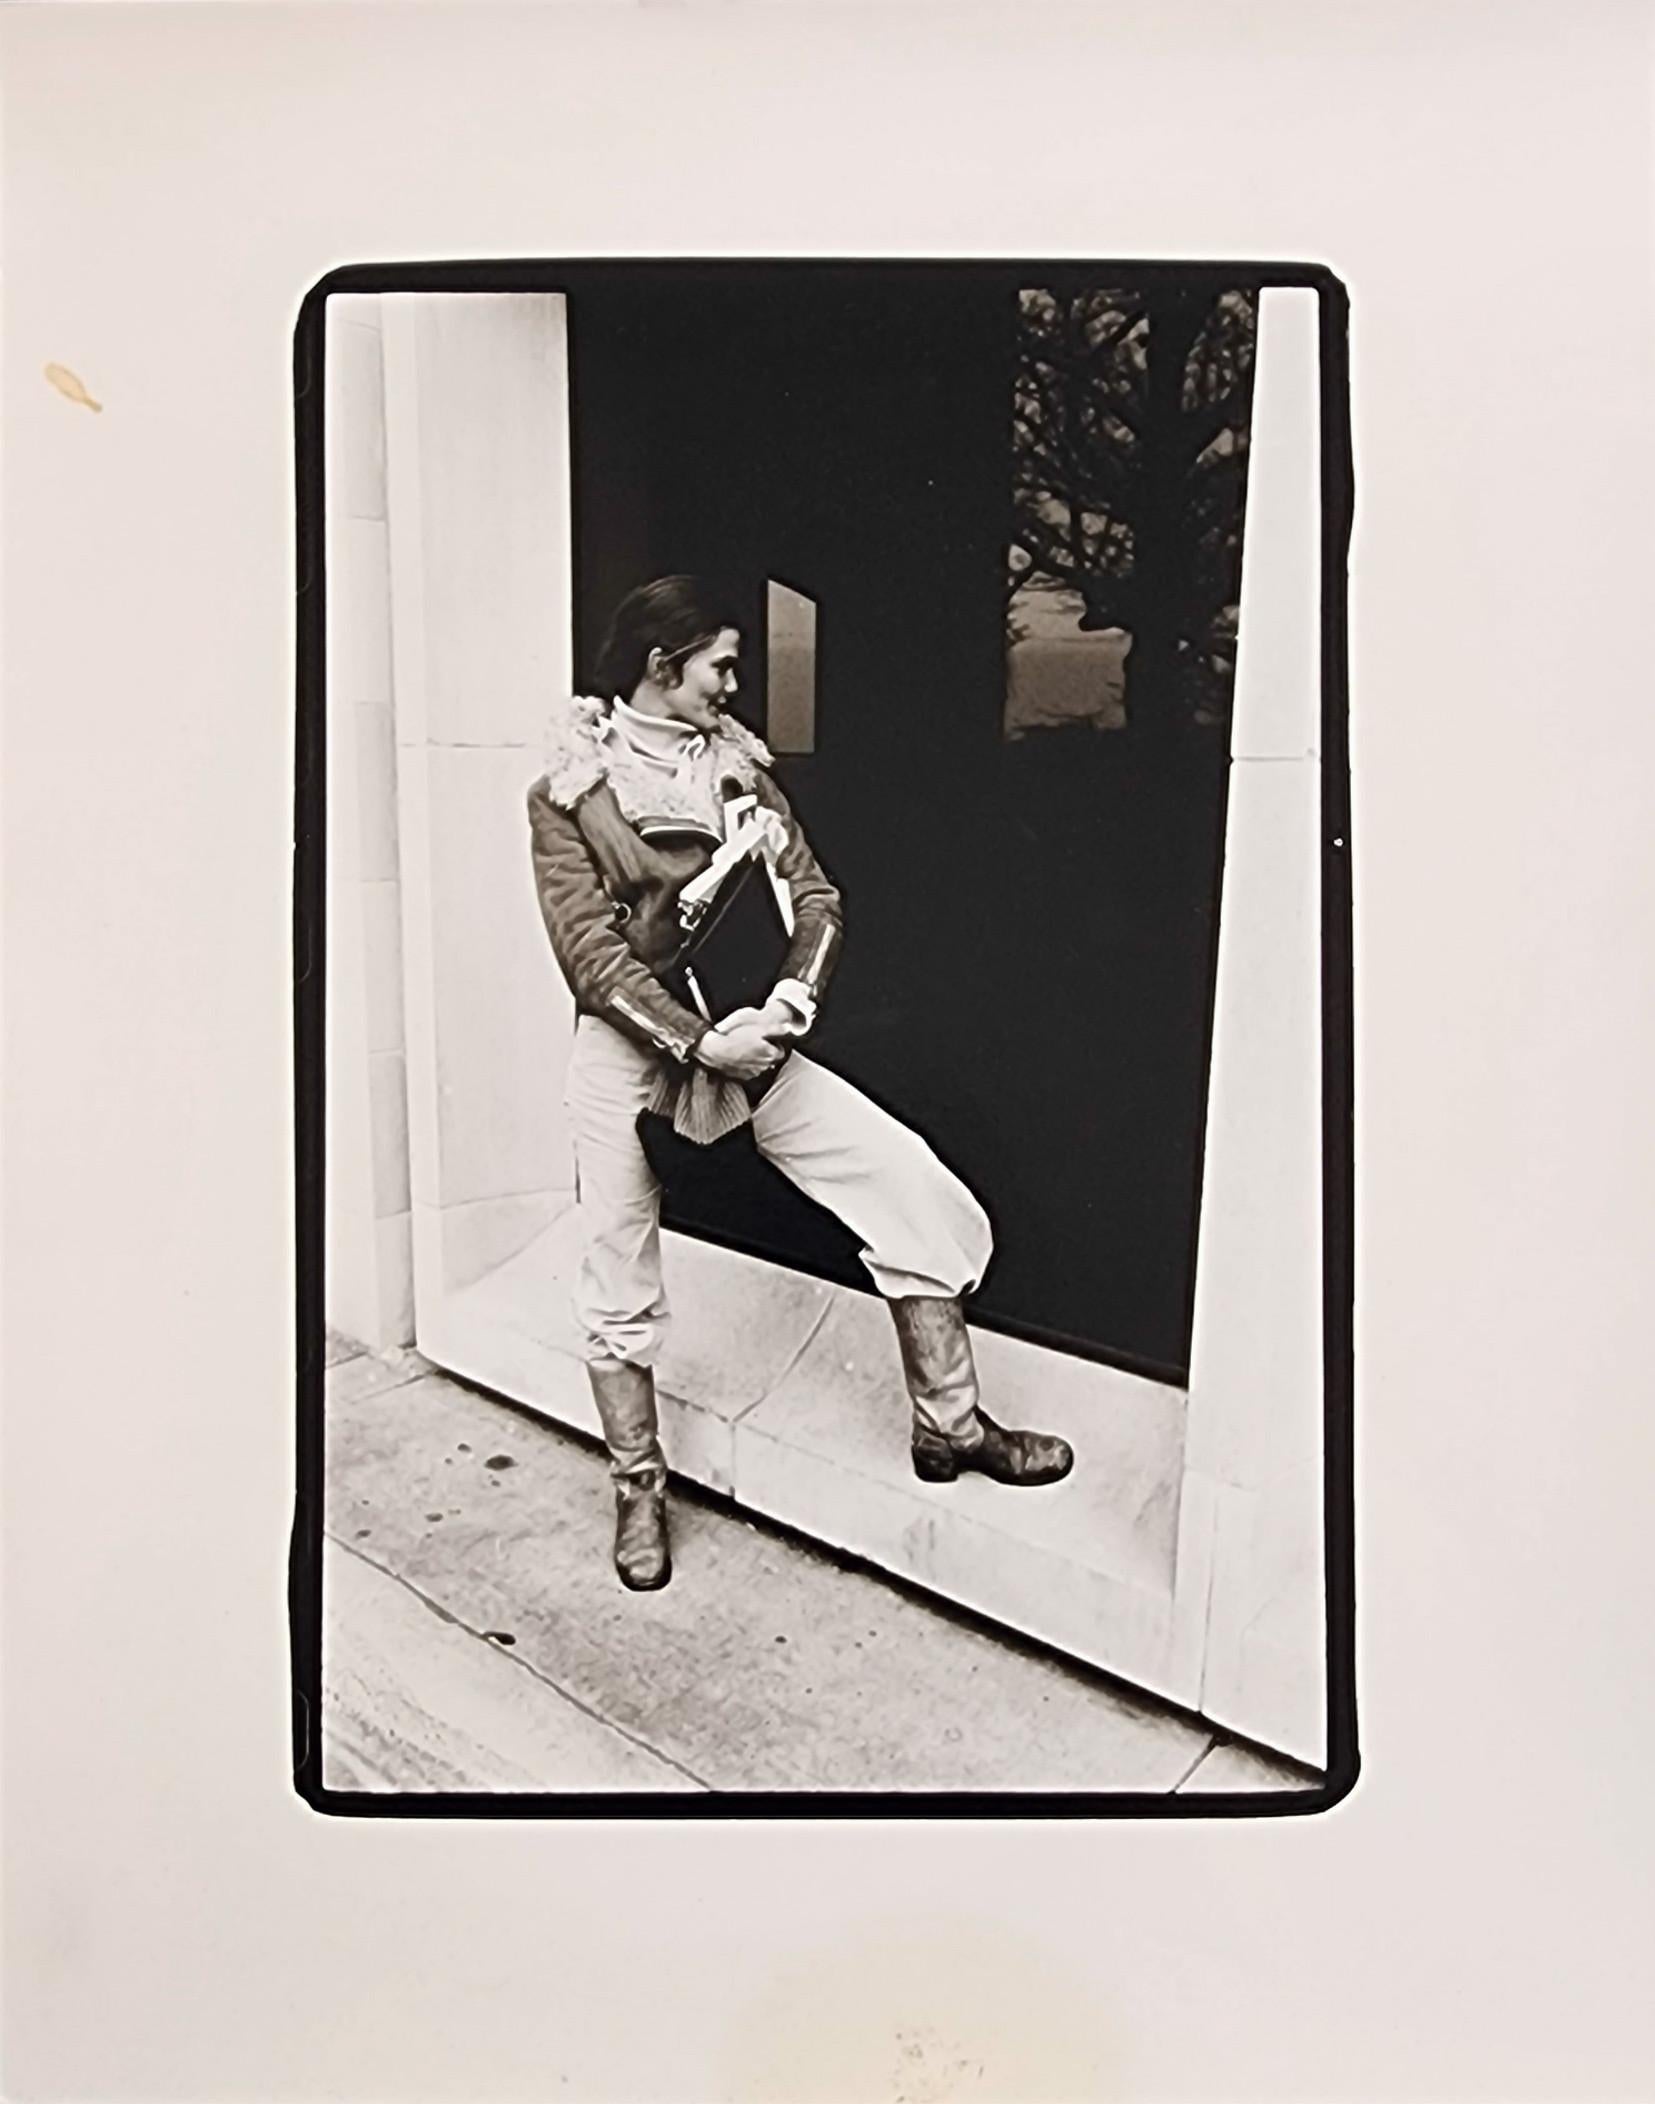 Joe Kelly Portrait Photograph - Untitled Portrait II (Black and White, Photography, Portrait, Model, New York)